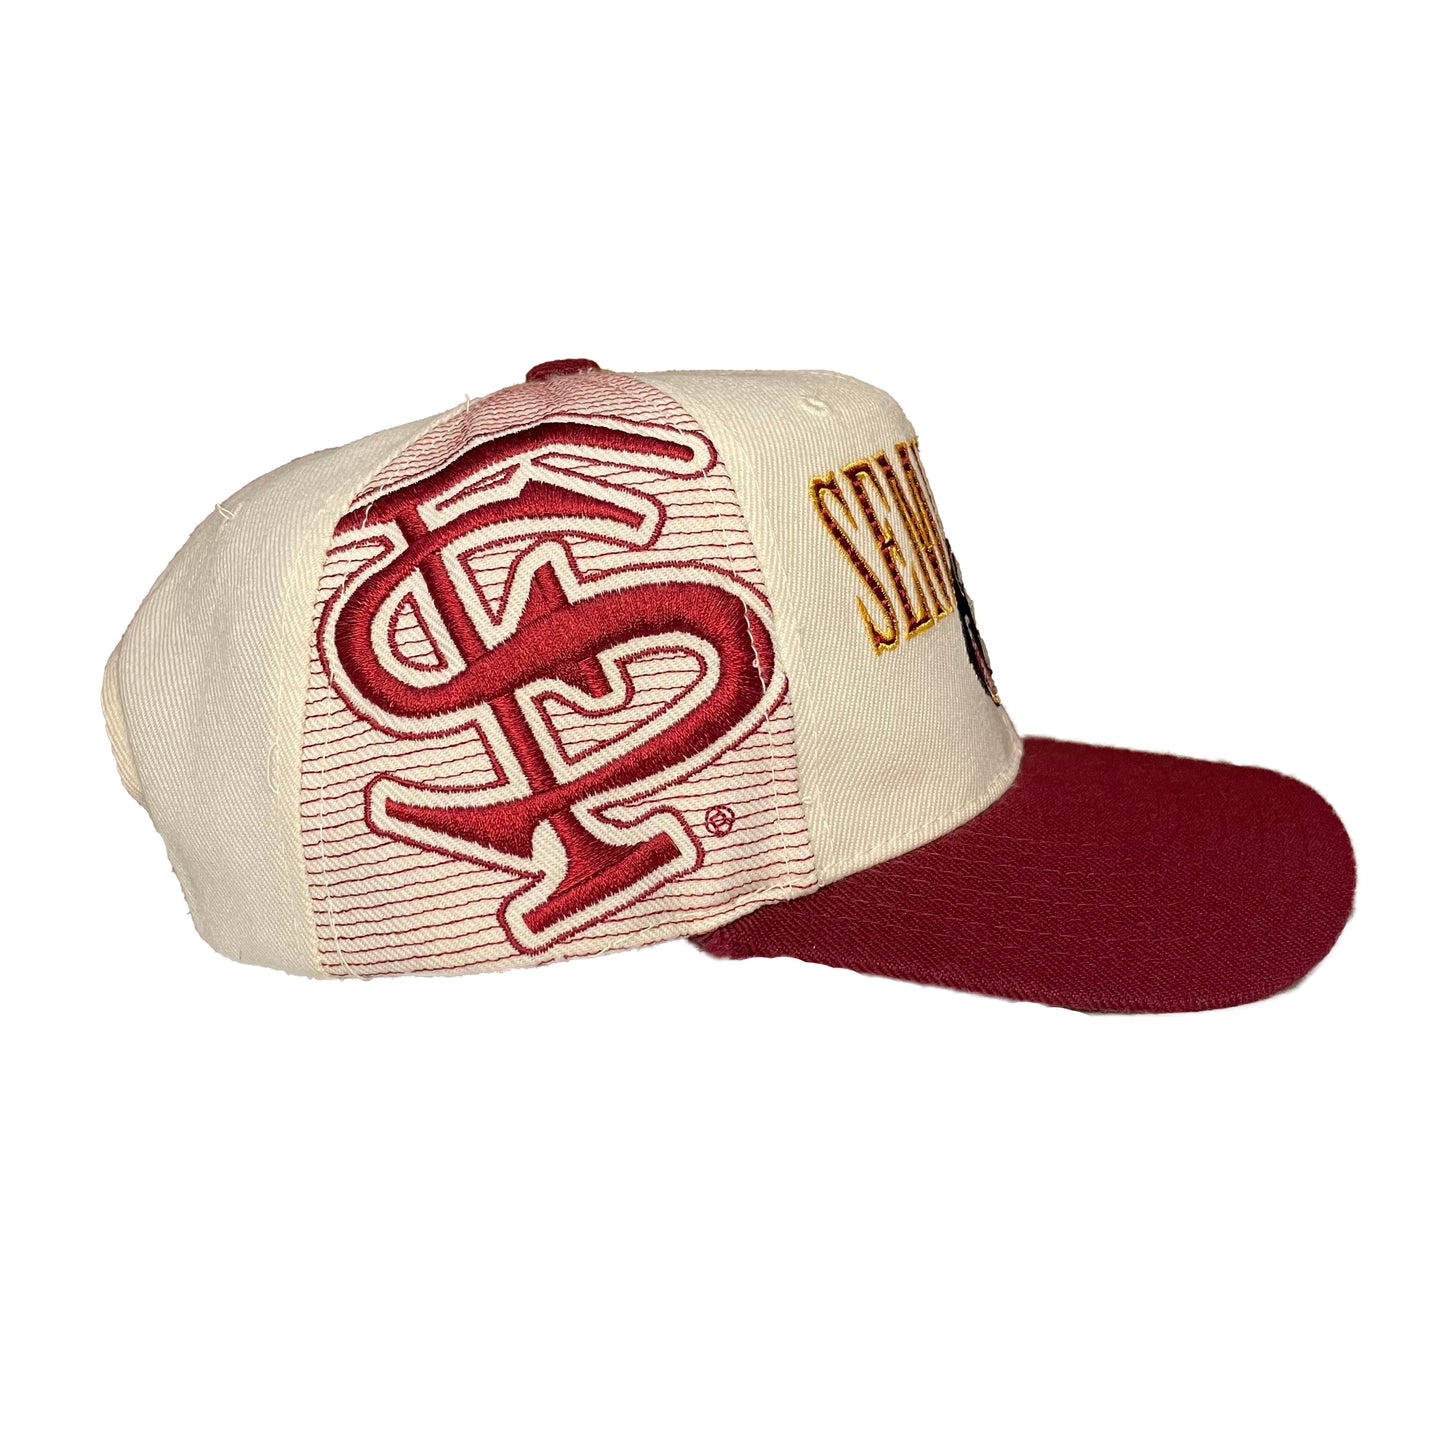 Florida State Seminoles FSU Sports Specialties "Laser" hat